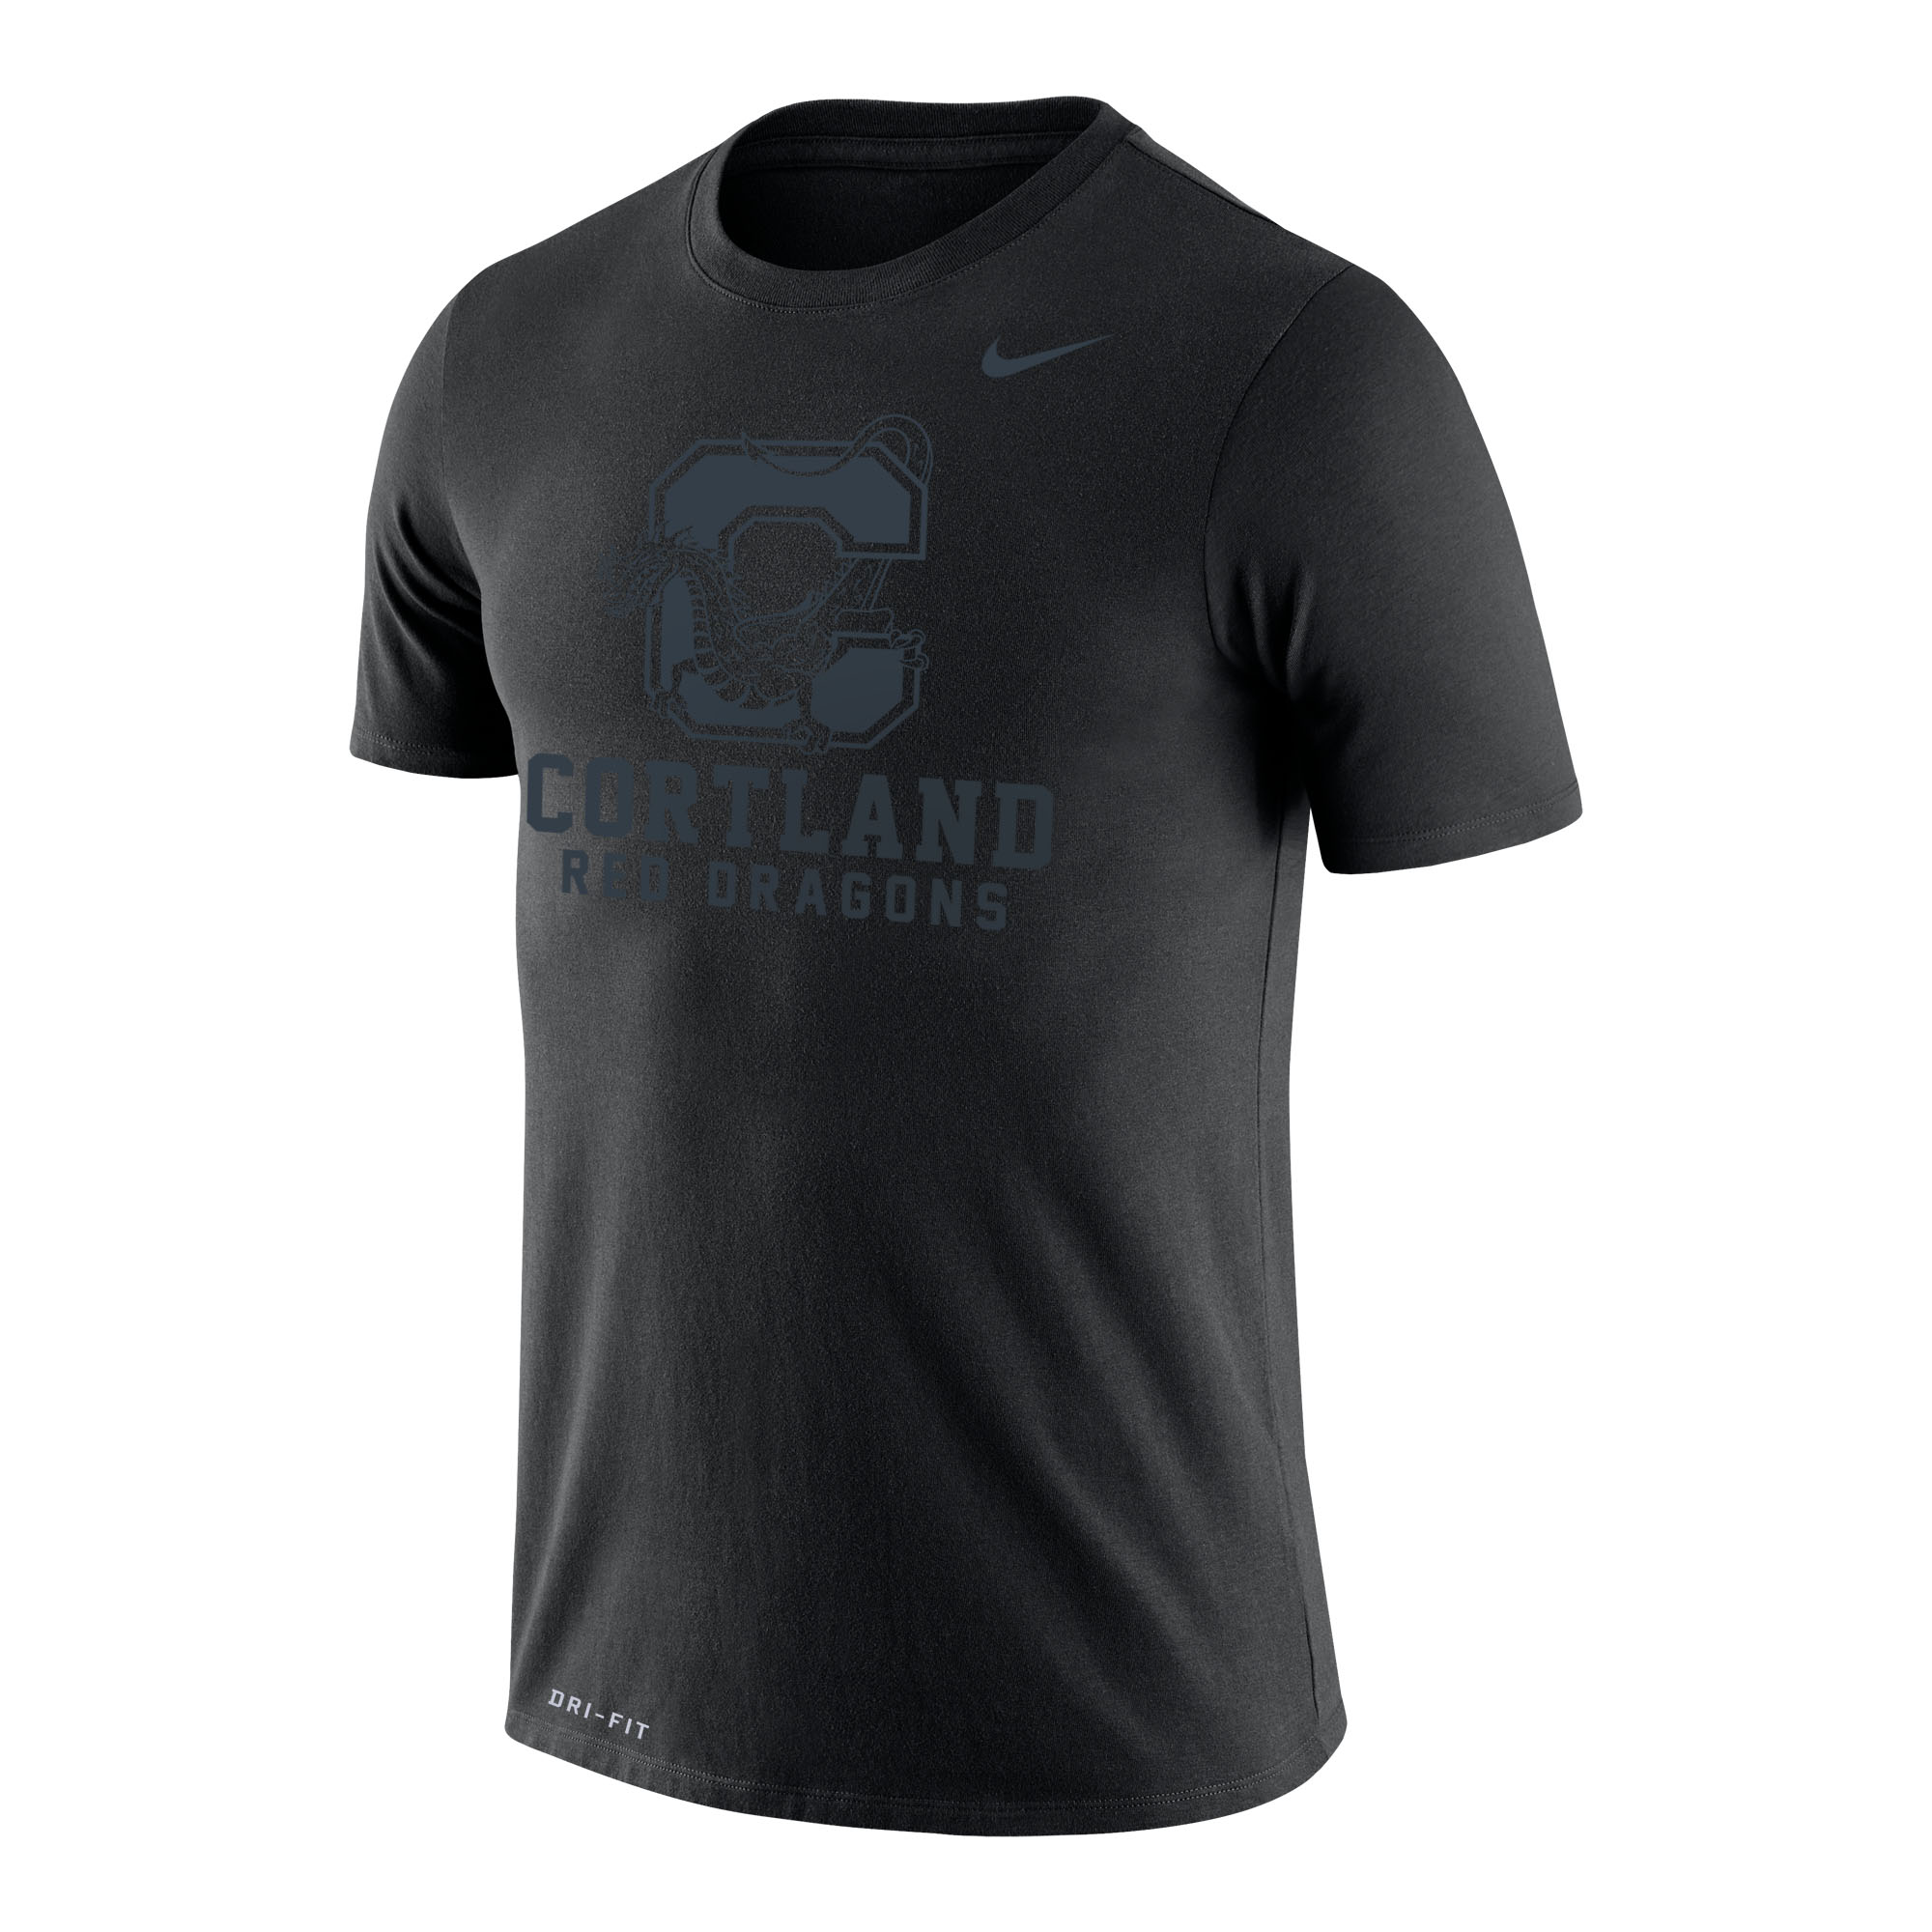 Penn State Under Armour Training T-Shirt